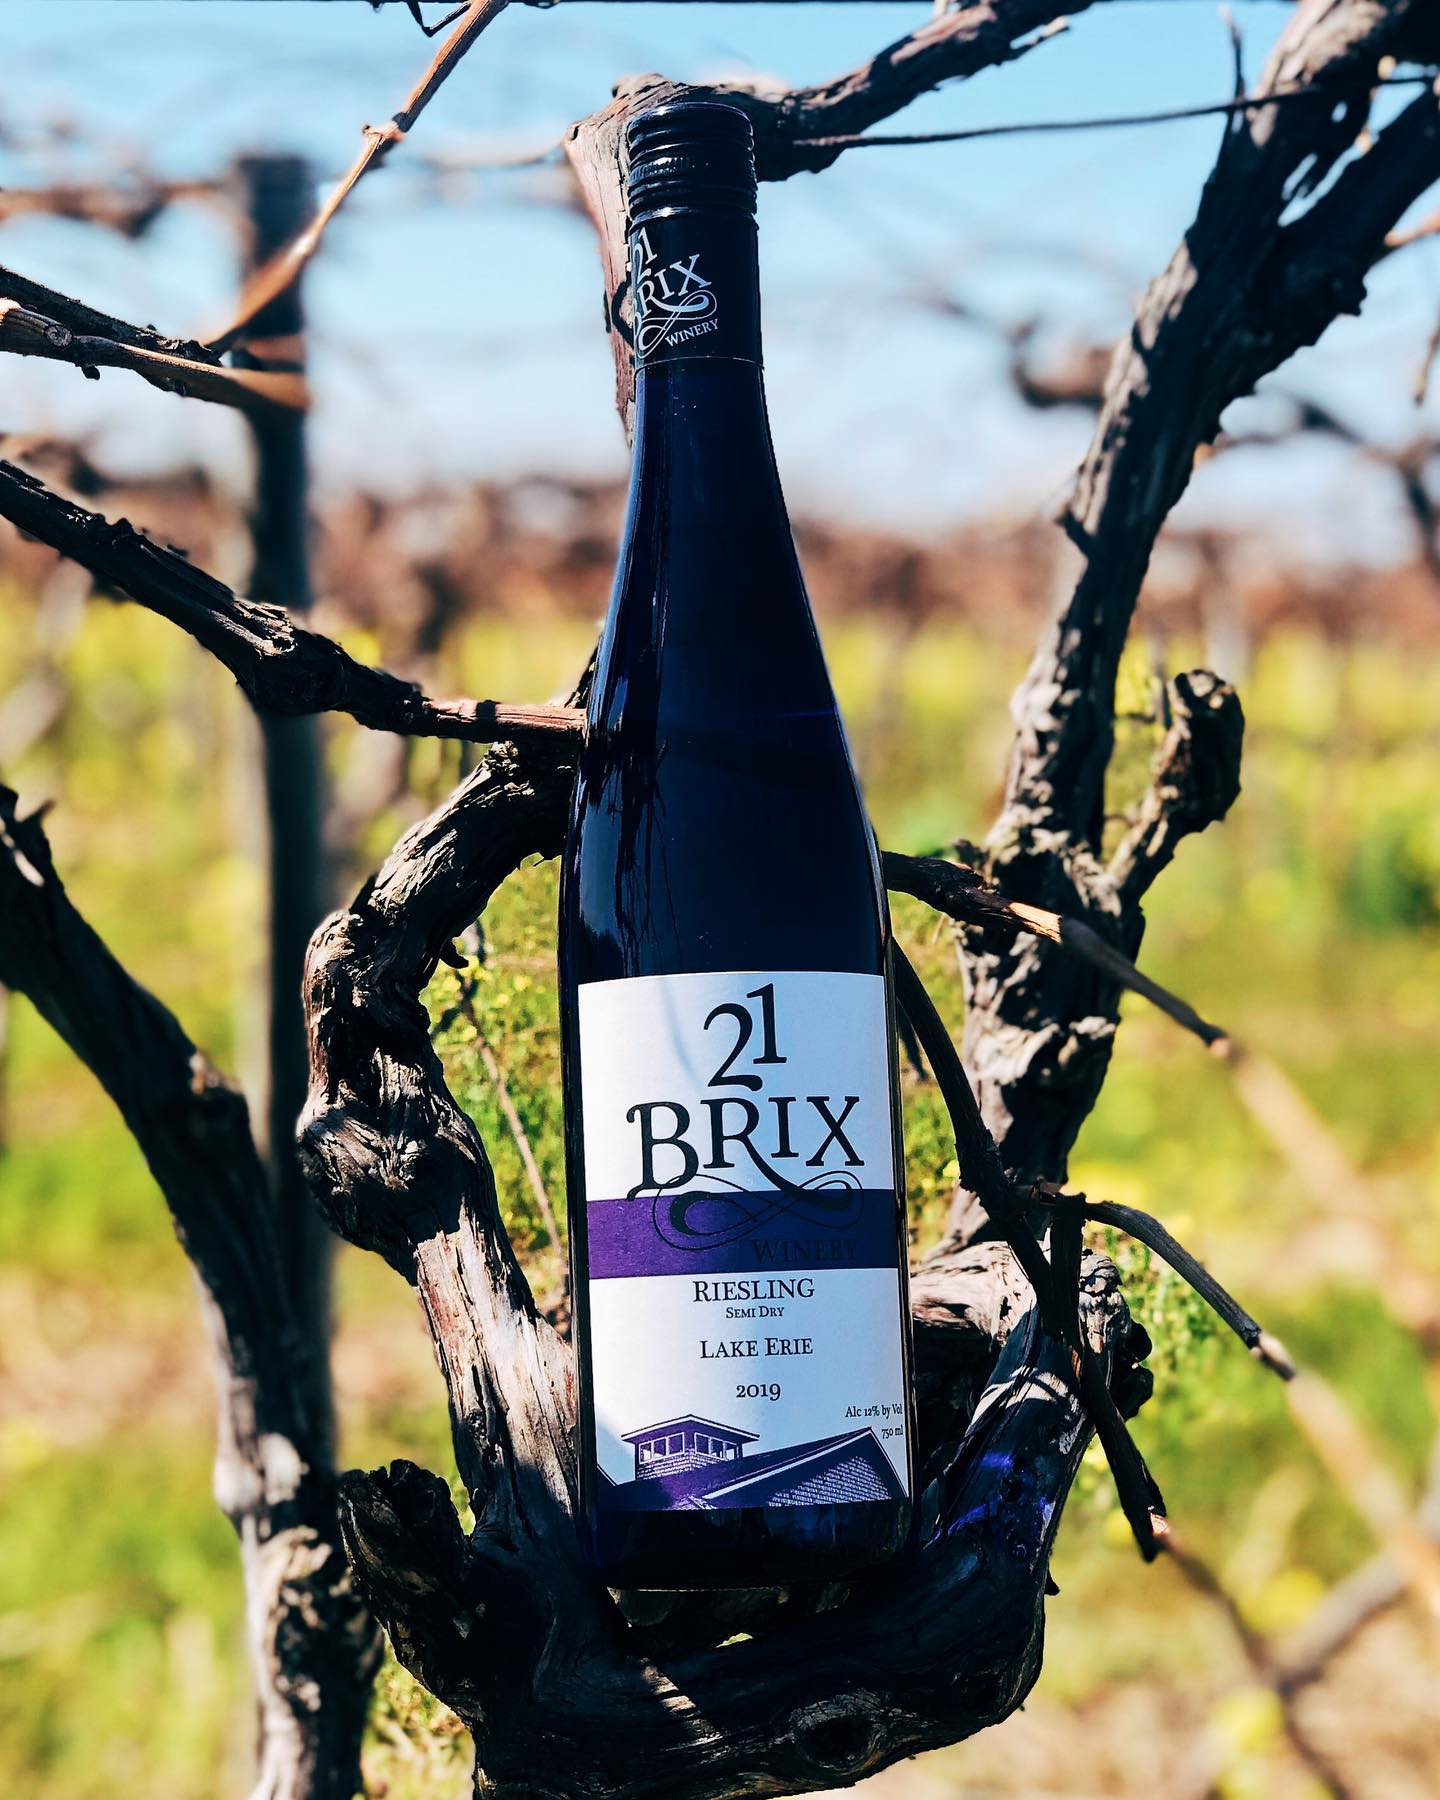 21 Brix Winery's Vineyard Walks 